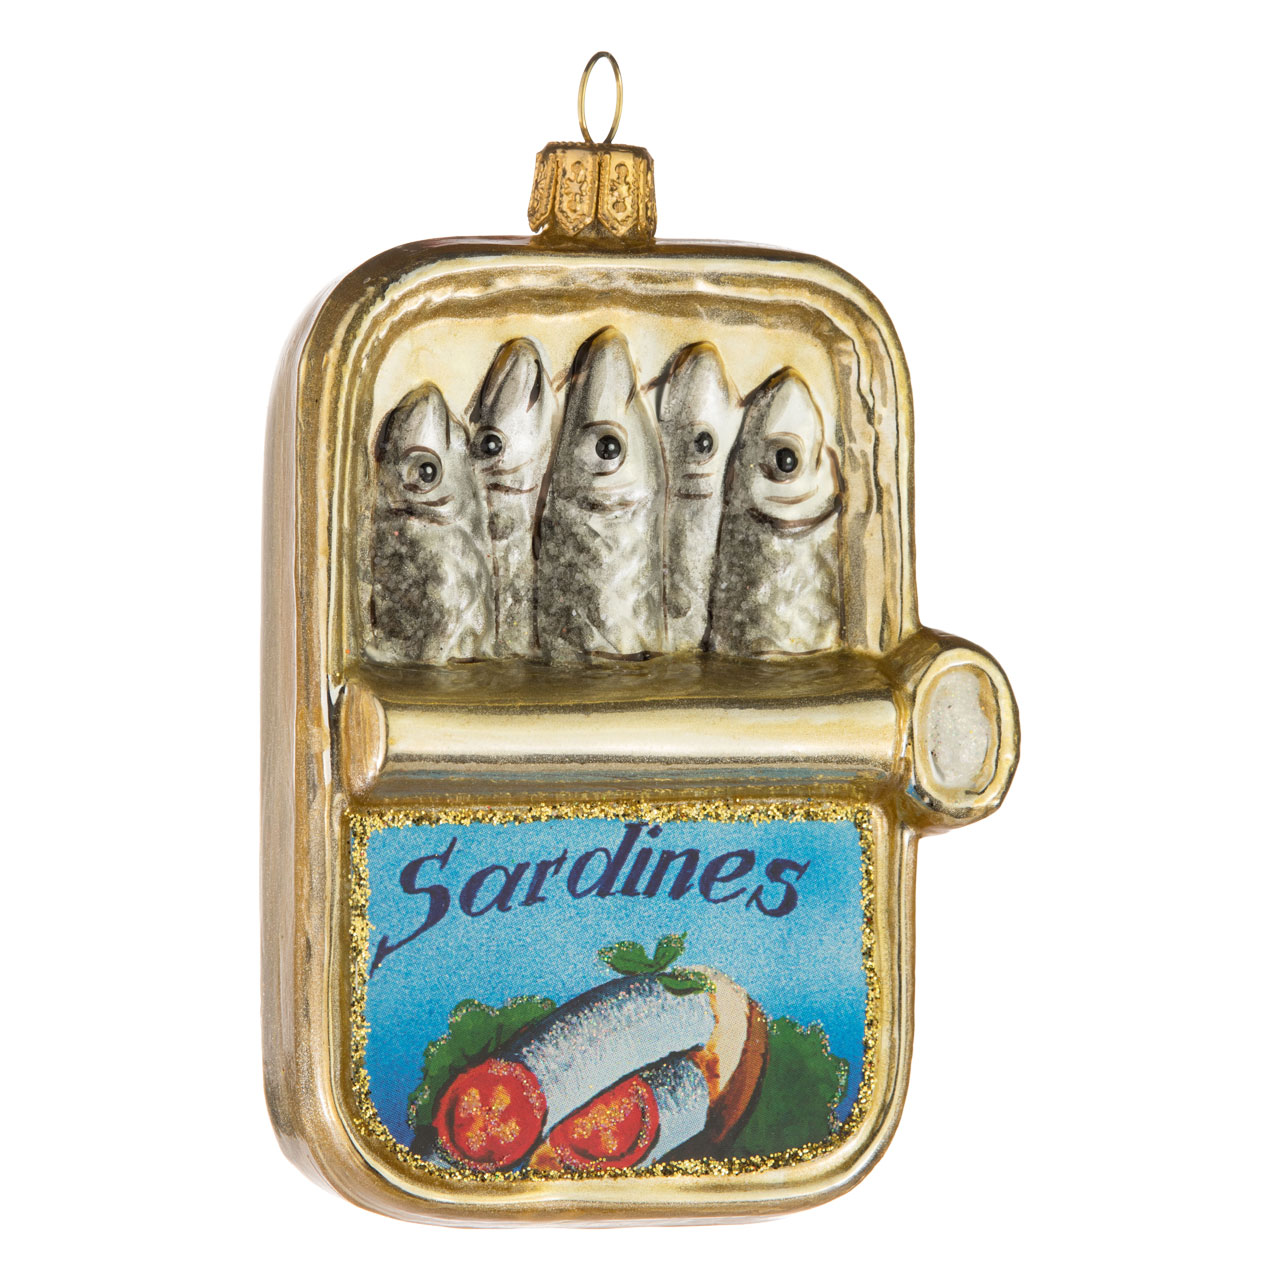 Lata de sardinas